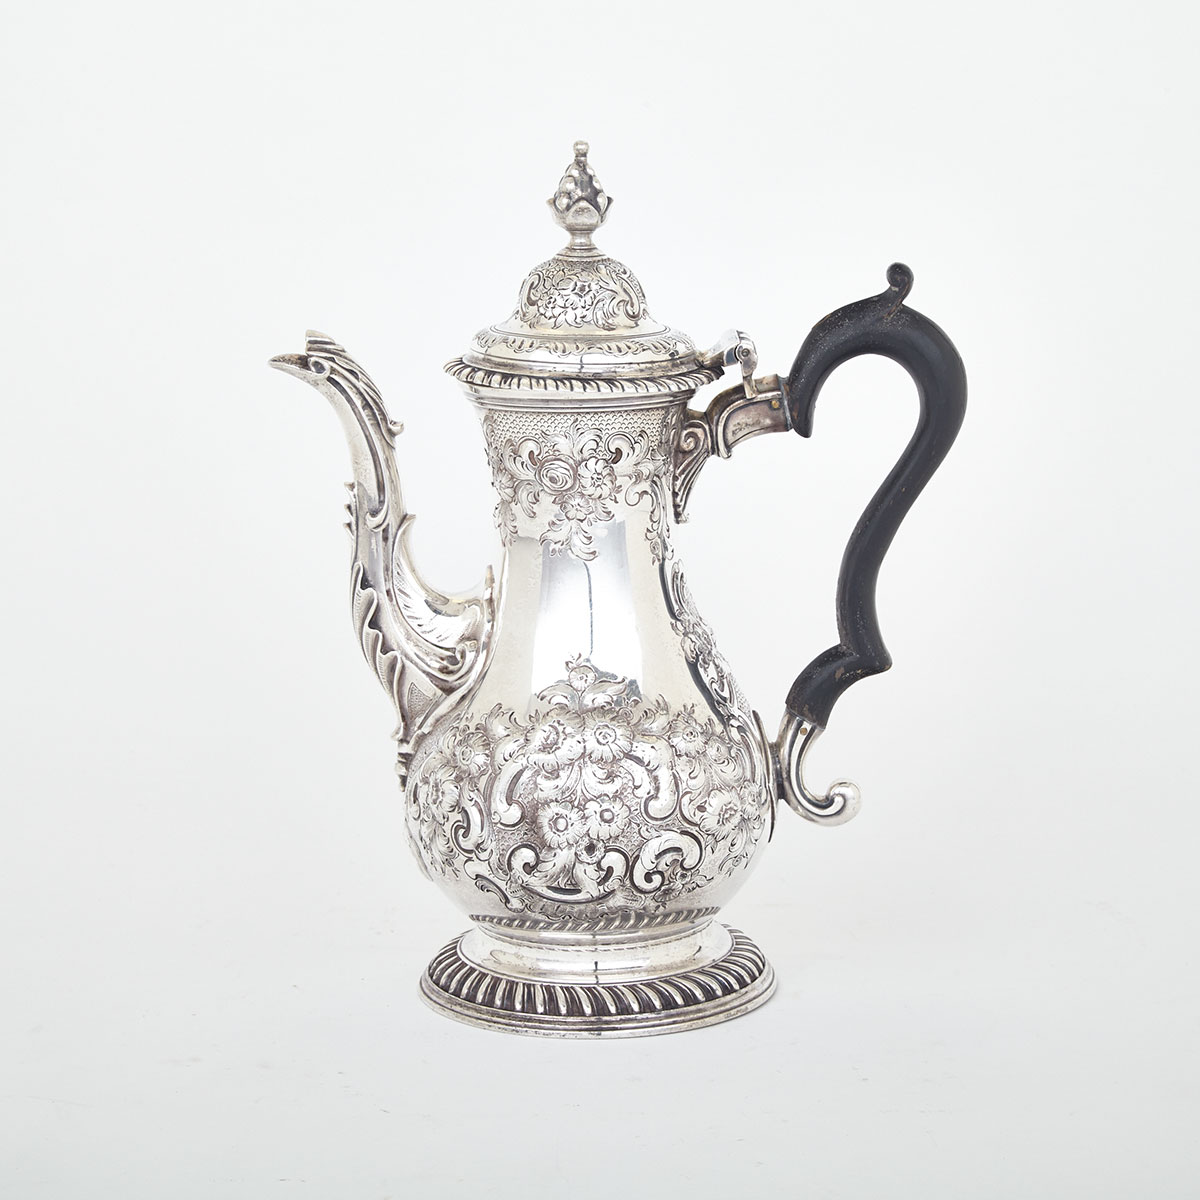 George III Silver Coffee Pot, James Stamp & John Baker, London, 1769